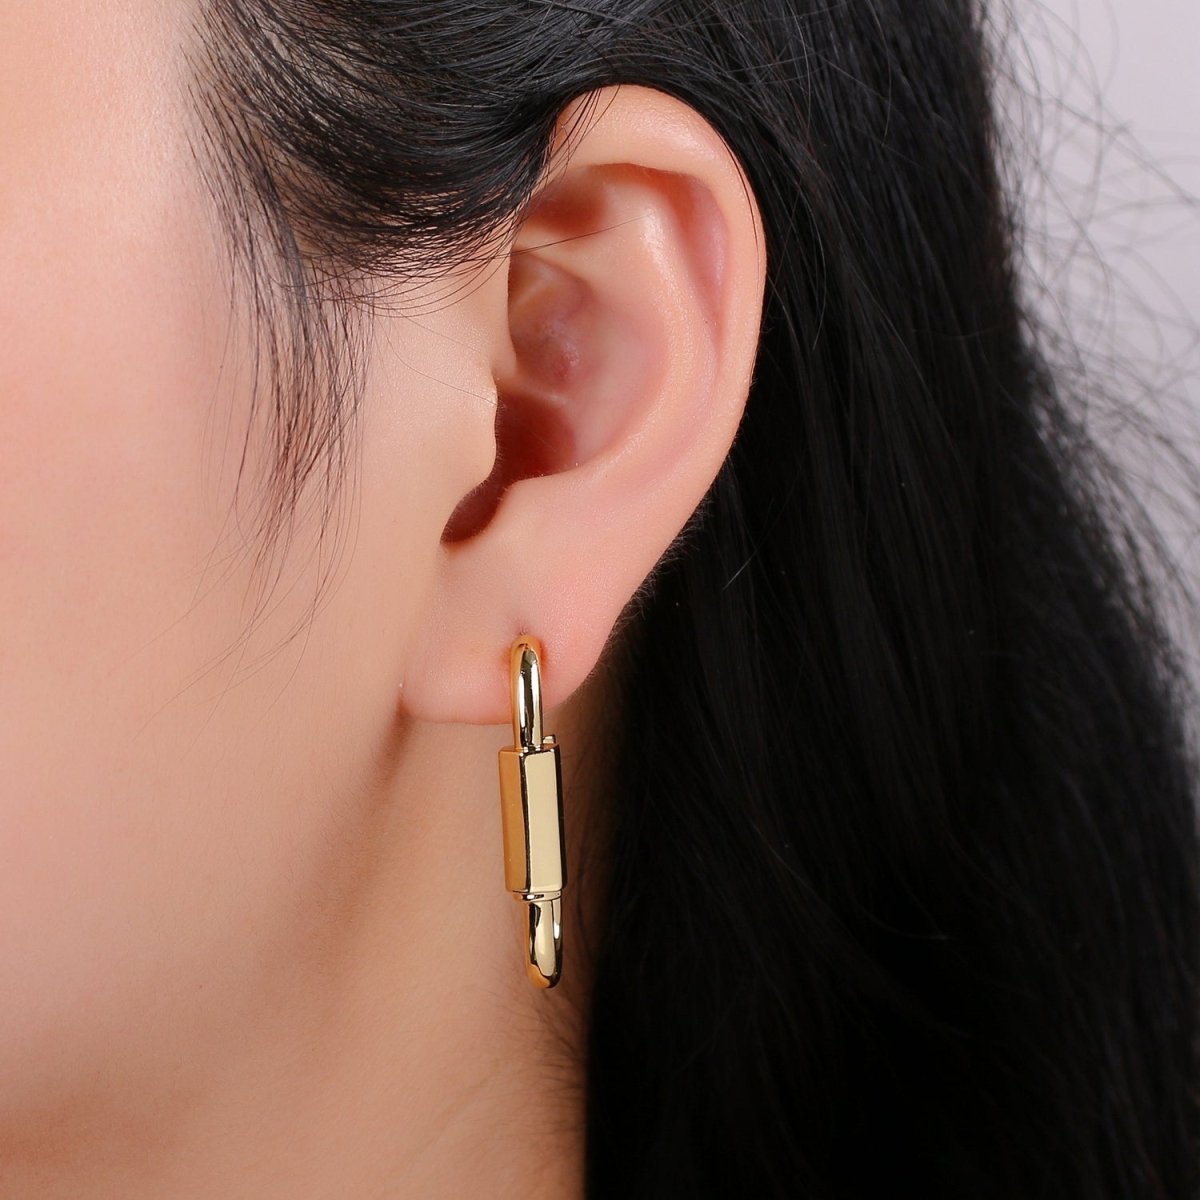 Chunky Carabiner Earrings, Thick Hoop Earrings, 14K Gold Filled Brass, Trend bold earrings, Bold gold earrings, Statement Q-279 - DLUXCA